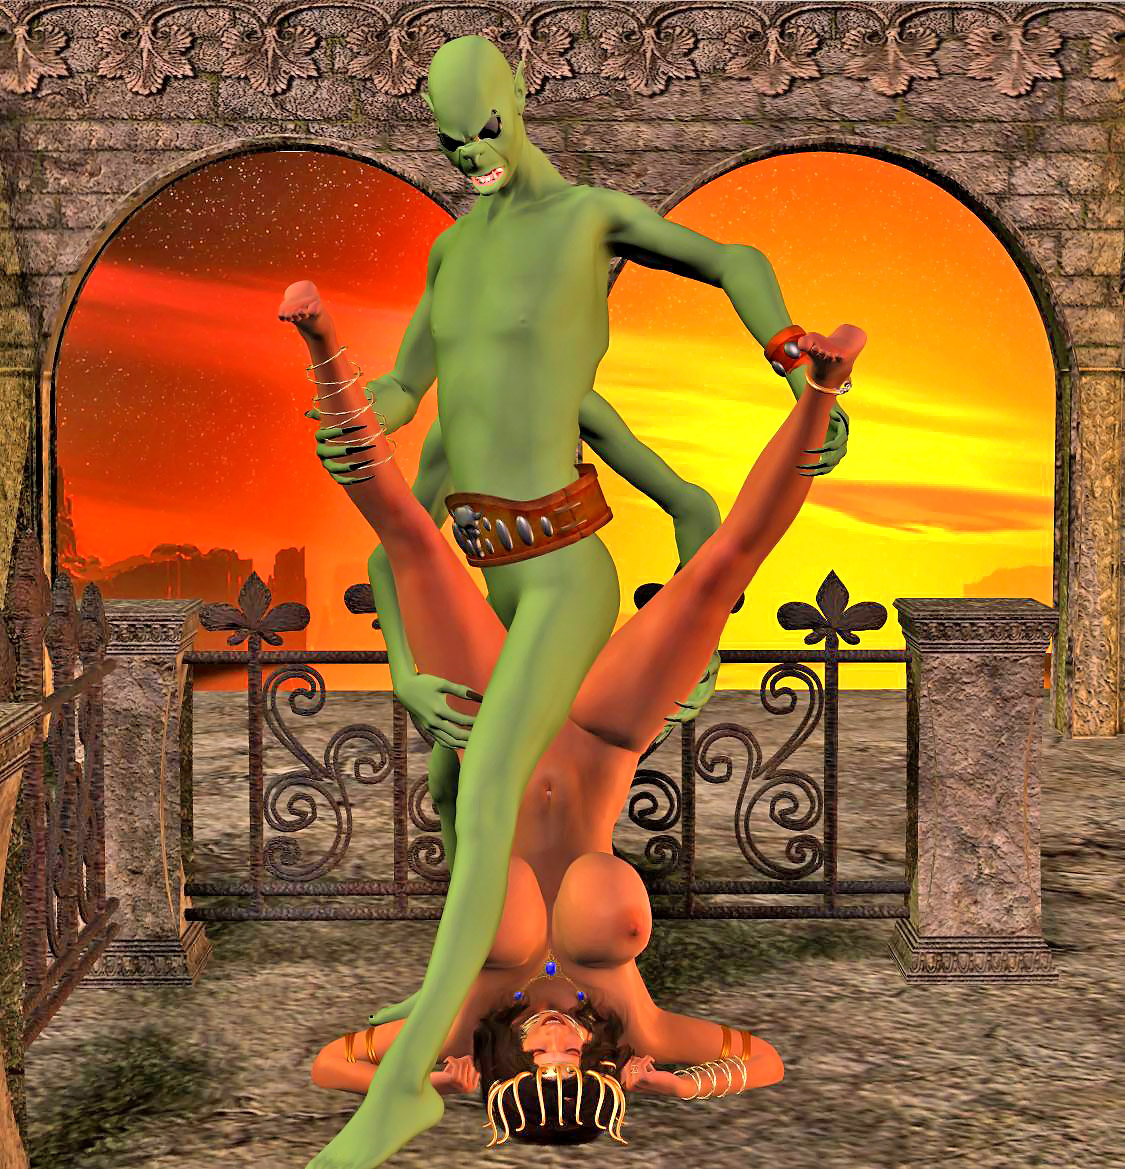 Green 3D monsters having sex with regular humans